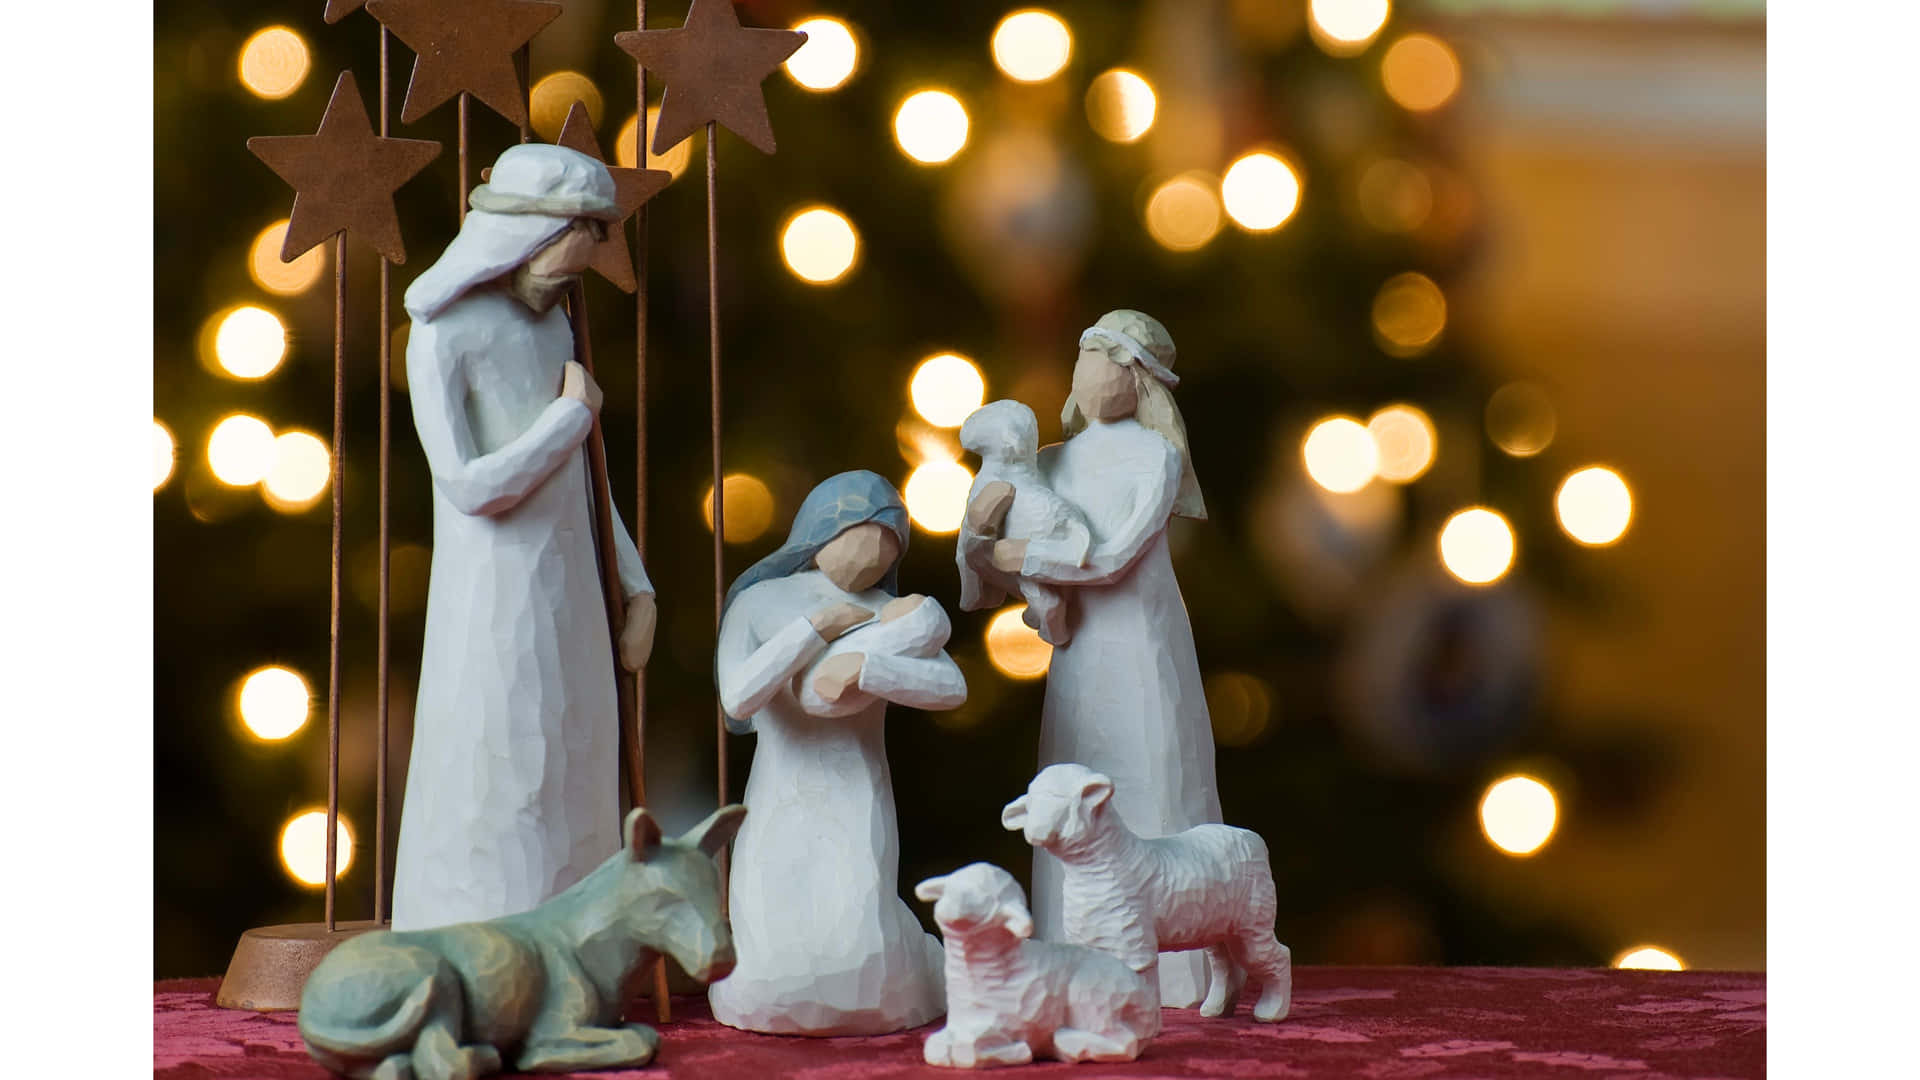 Celebrate the Birth of Jesus Christ this Christmas